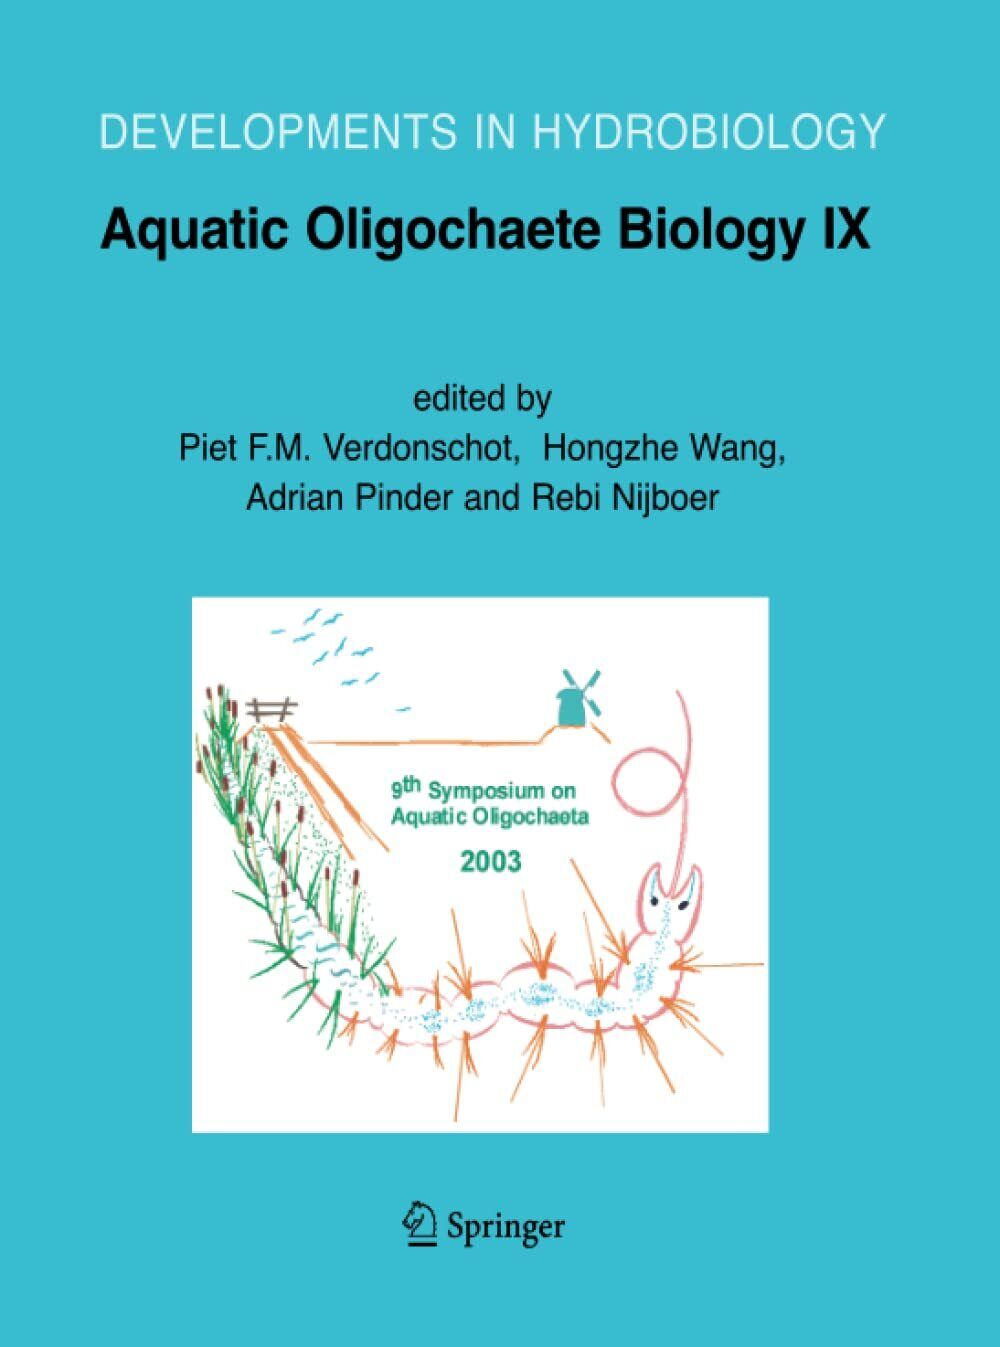 Aquatic Oligochaete Biology IX - Piet F.M. Verdonschot - Springer, 2014